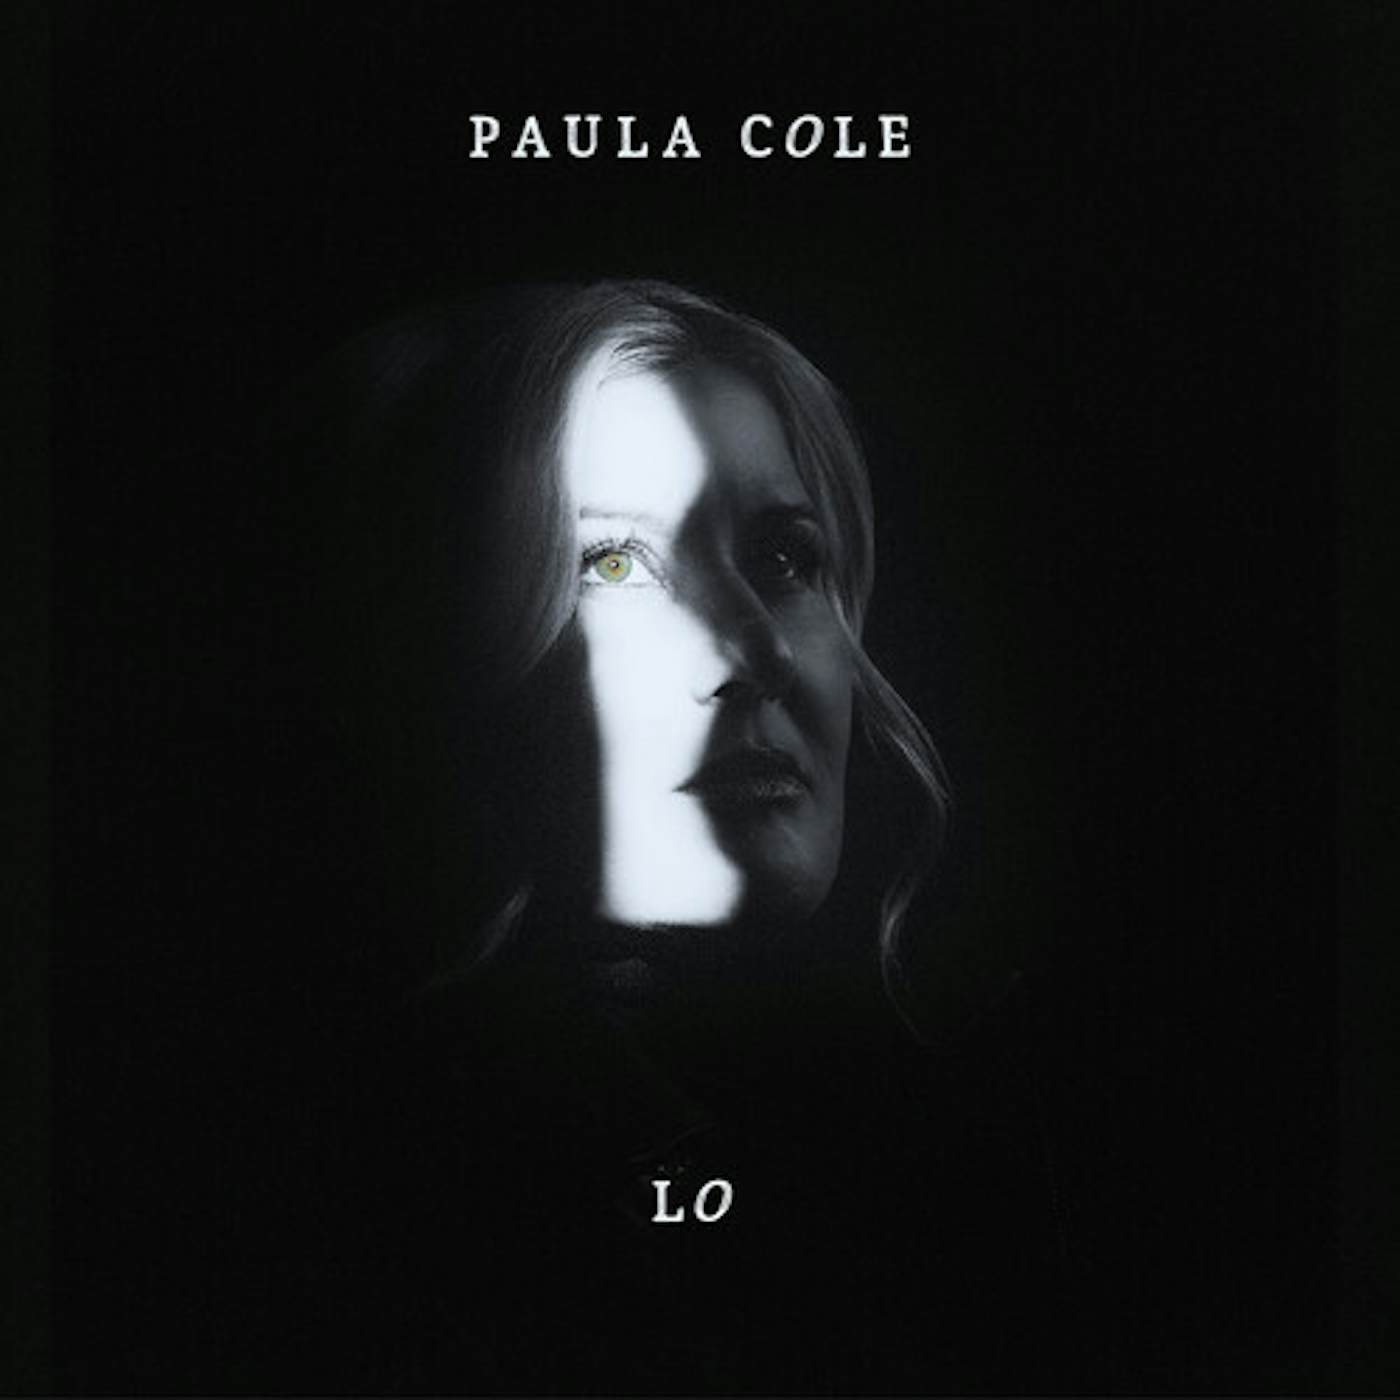 Paula Cole LO Vinyl Record - Gatefold Sleeve